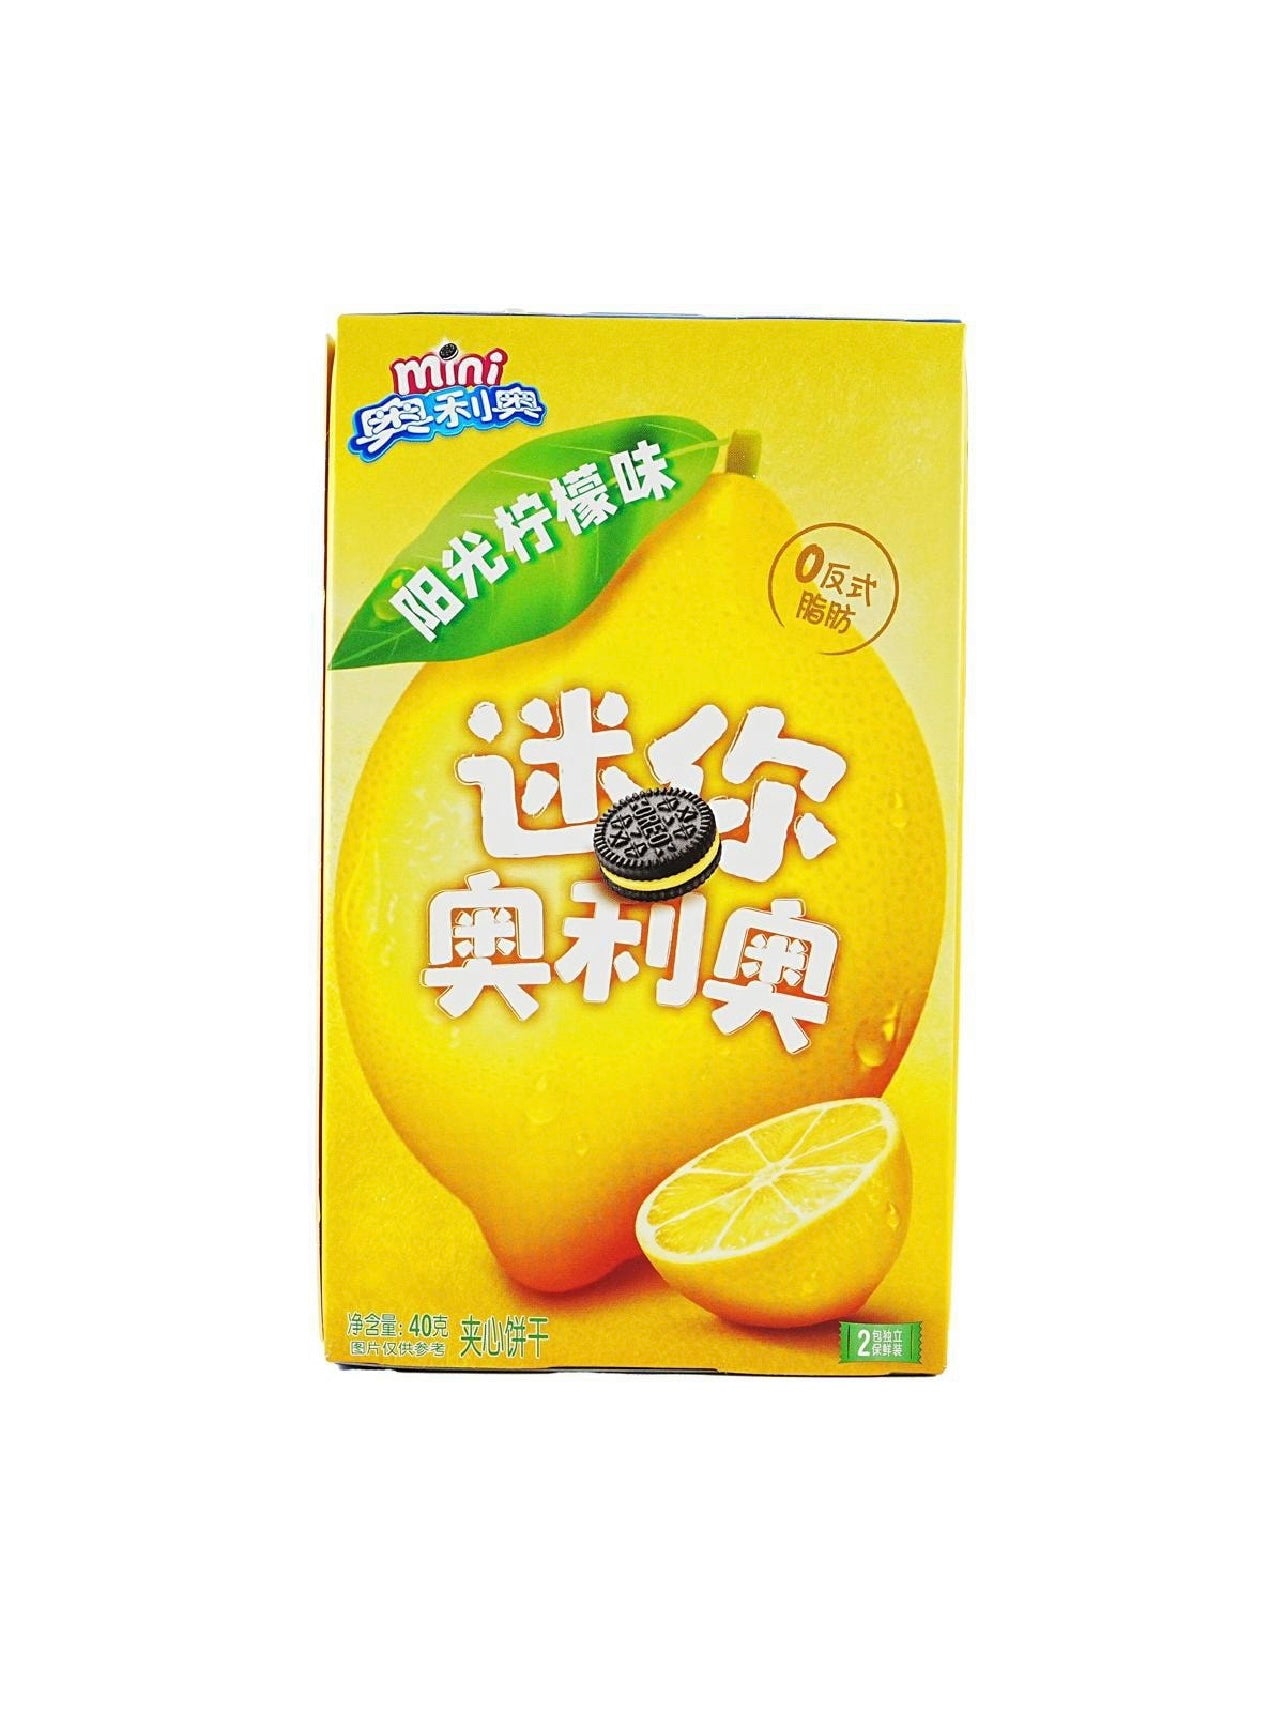 OREO Biscuit Lemon Flavor 1.41 oz - China